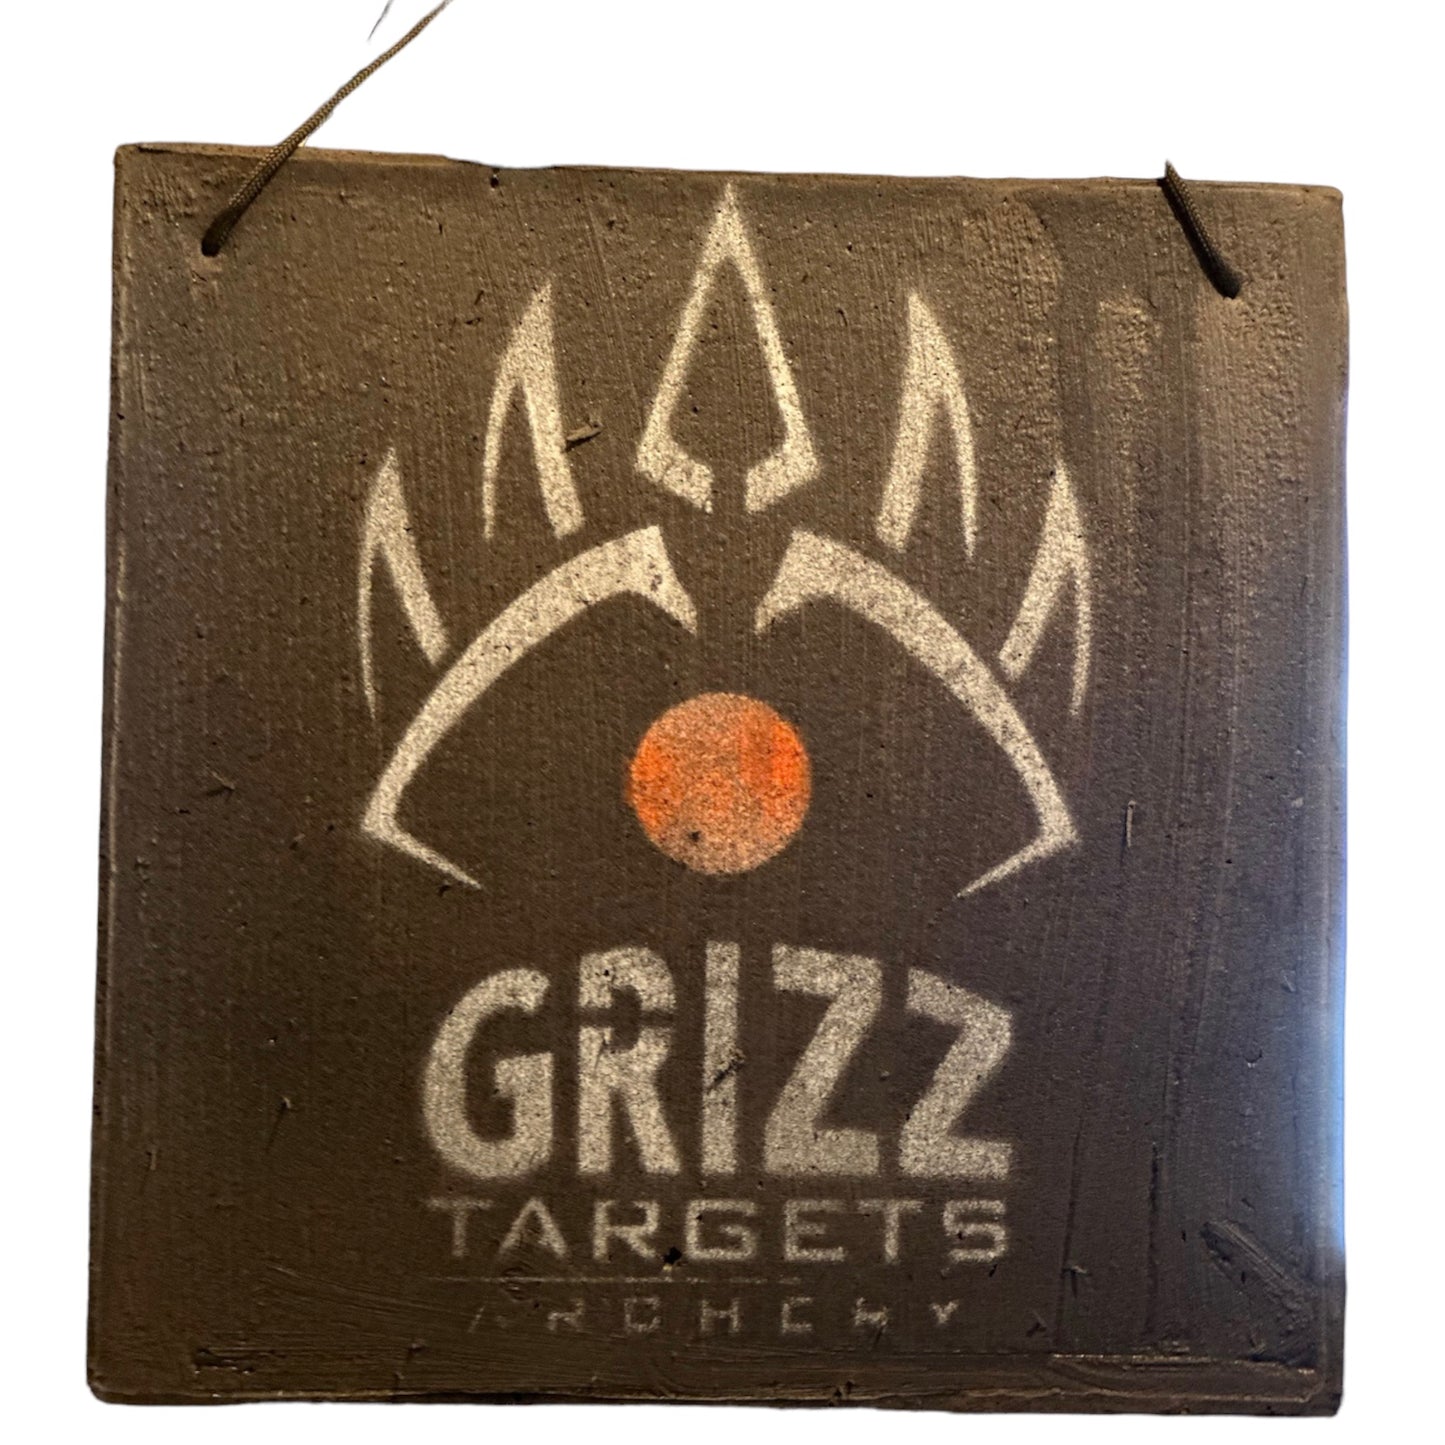 GRIZZ Backpacker 12"